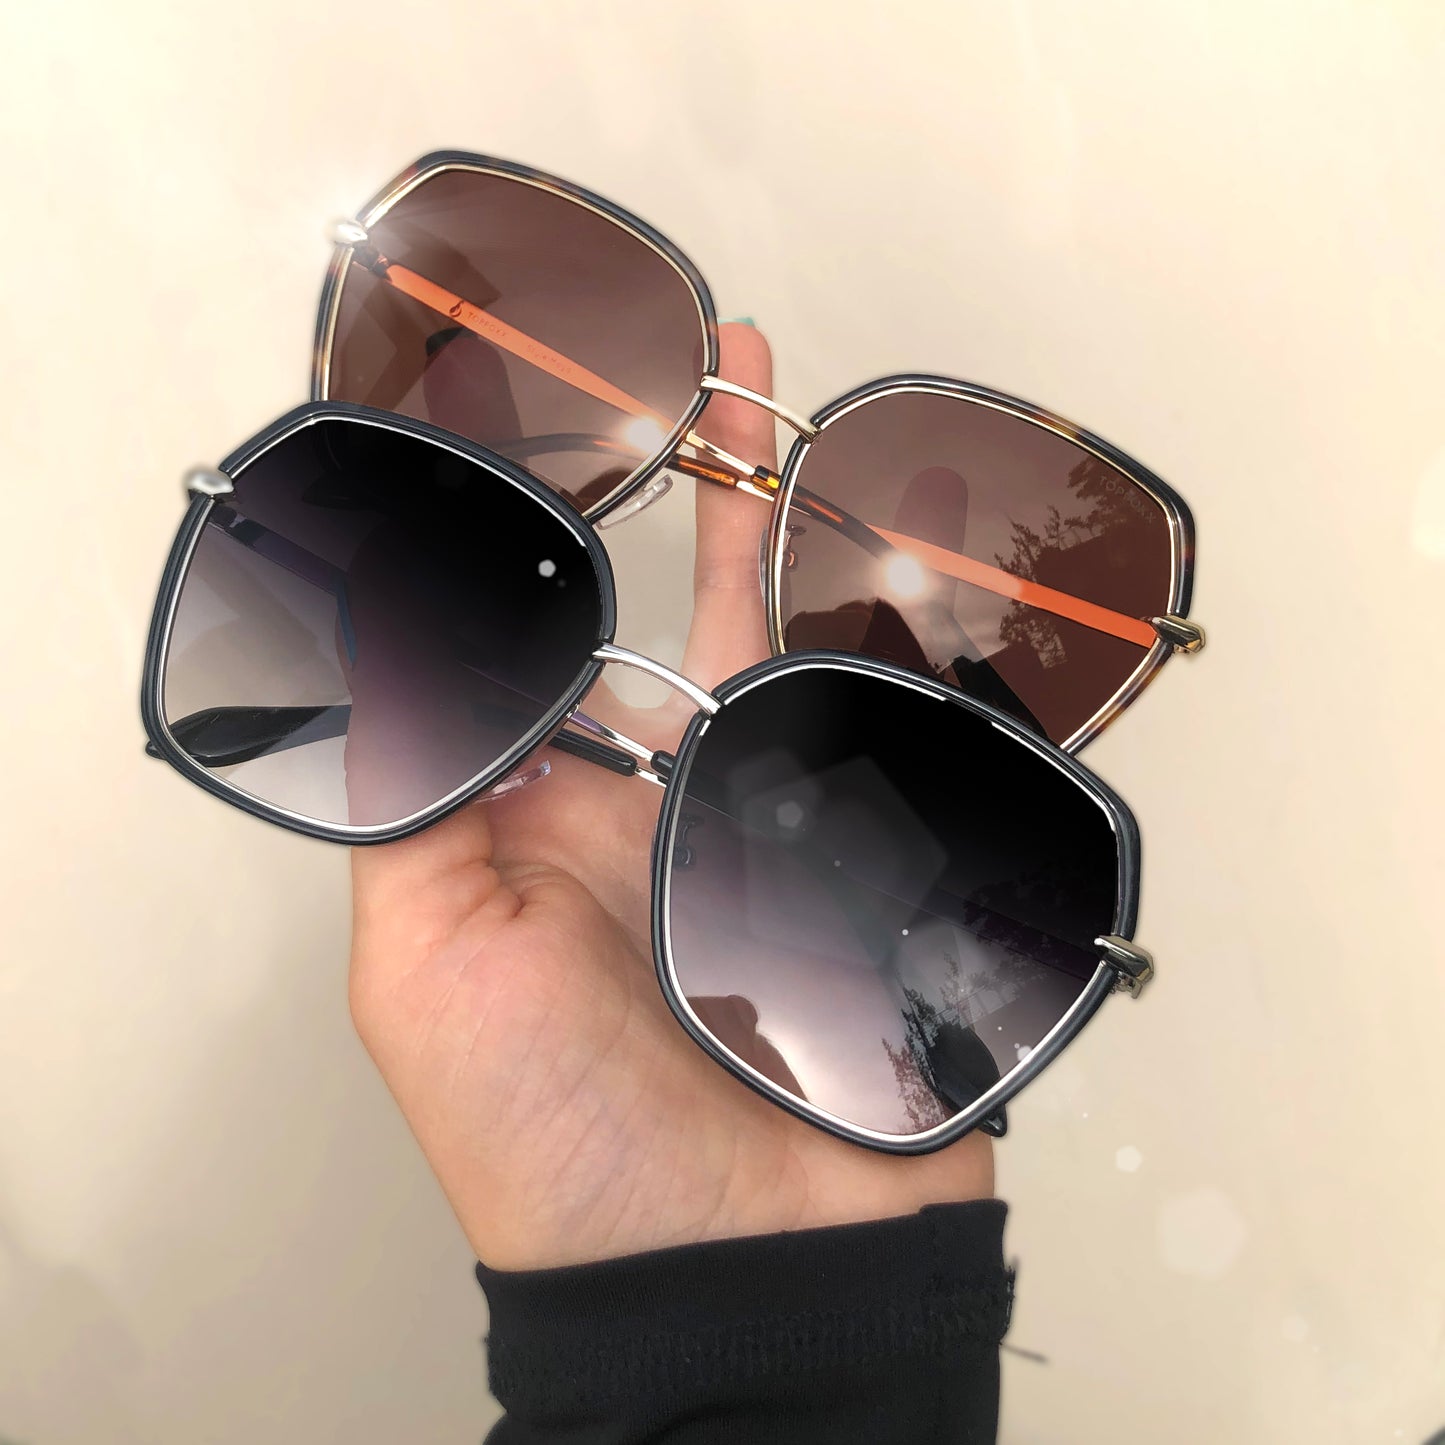 TopFoxx - Maya - Oversized Polarized Tortoise Shell Womens Sunglasses - Trendy Oversized Sunnies